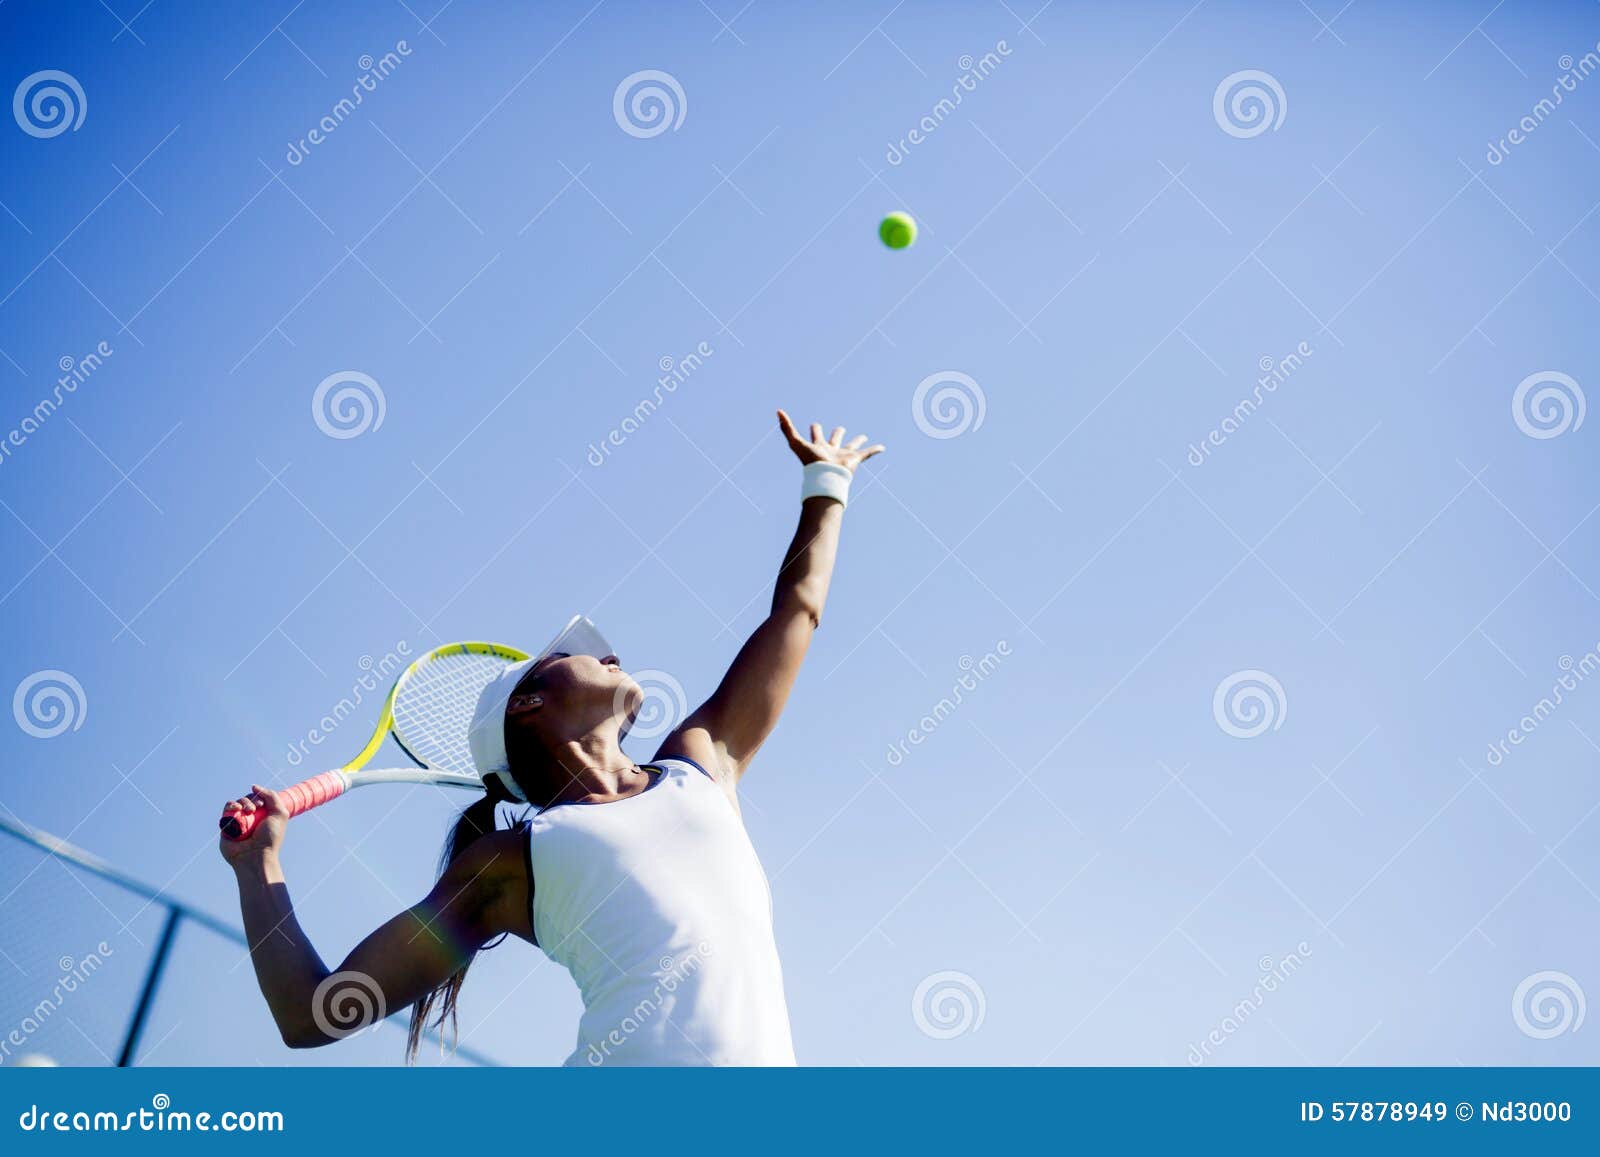 beautiful female tennis player serving